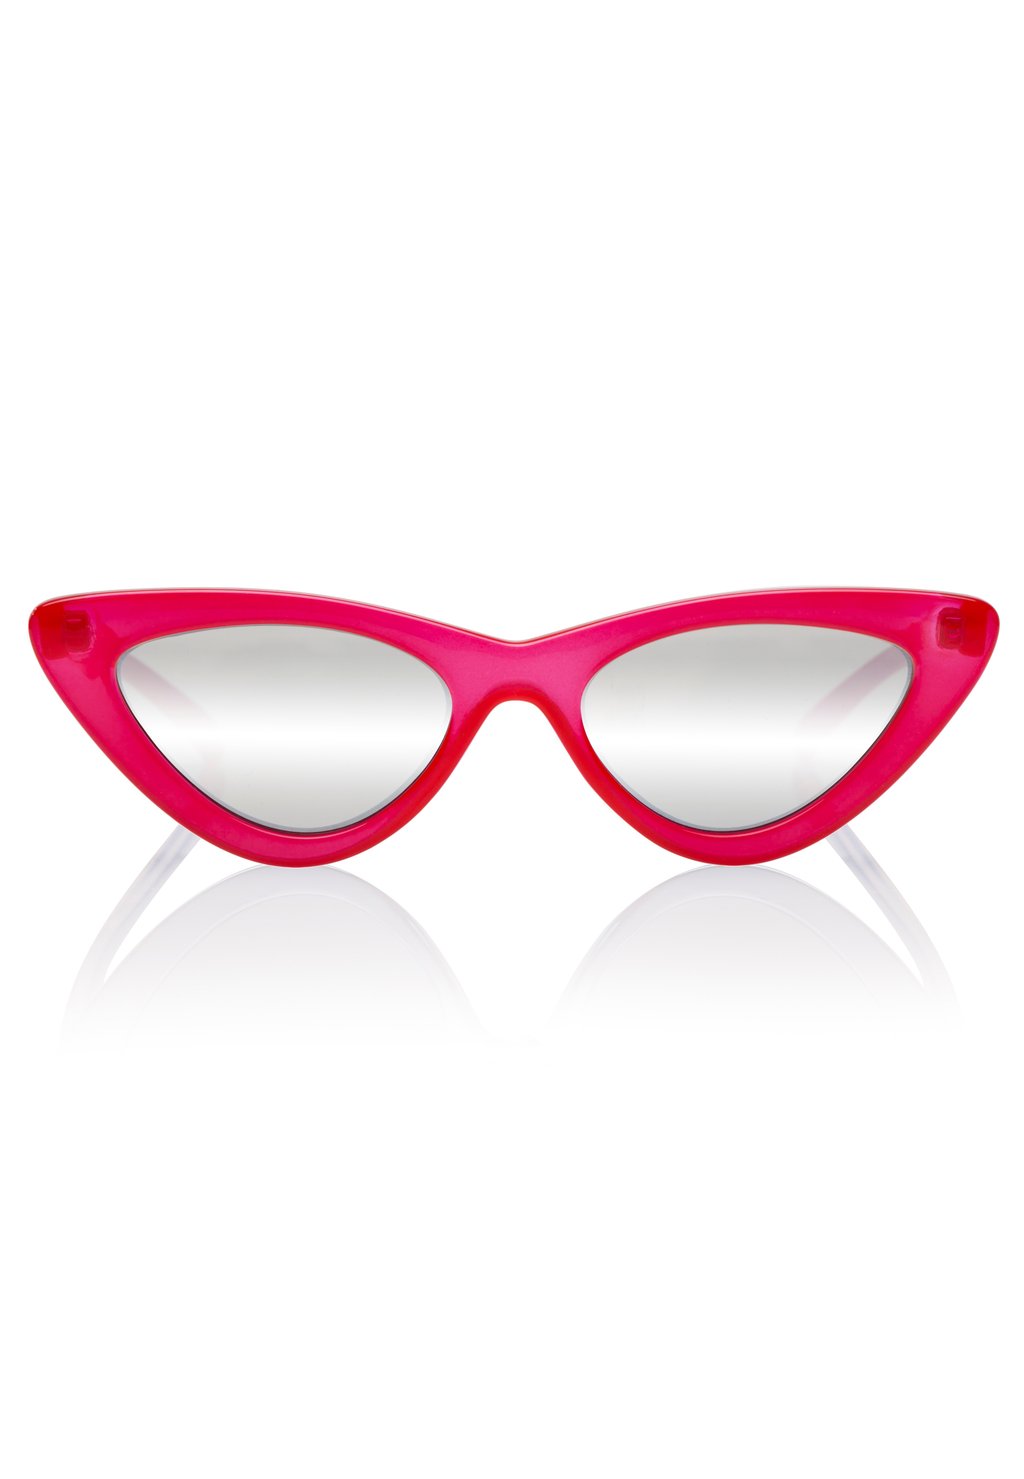 Солнцезащитные очки Le Specs